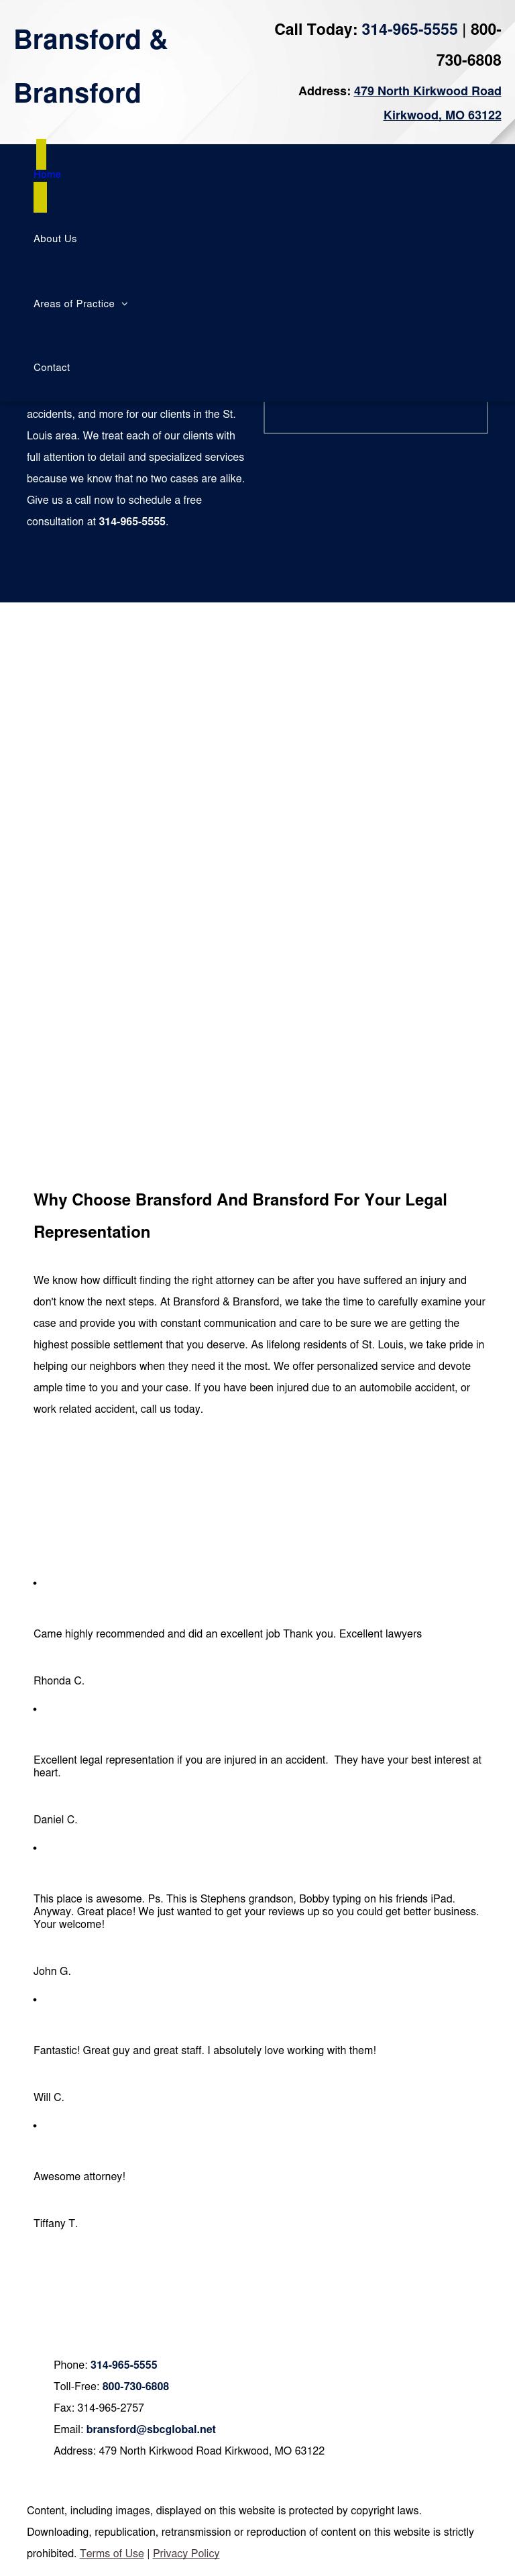 Bransford and Bransford - Saint Louis MO Lawyers